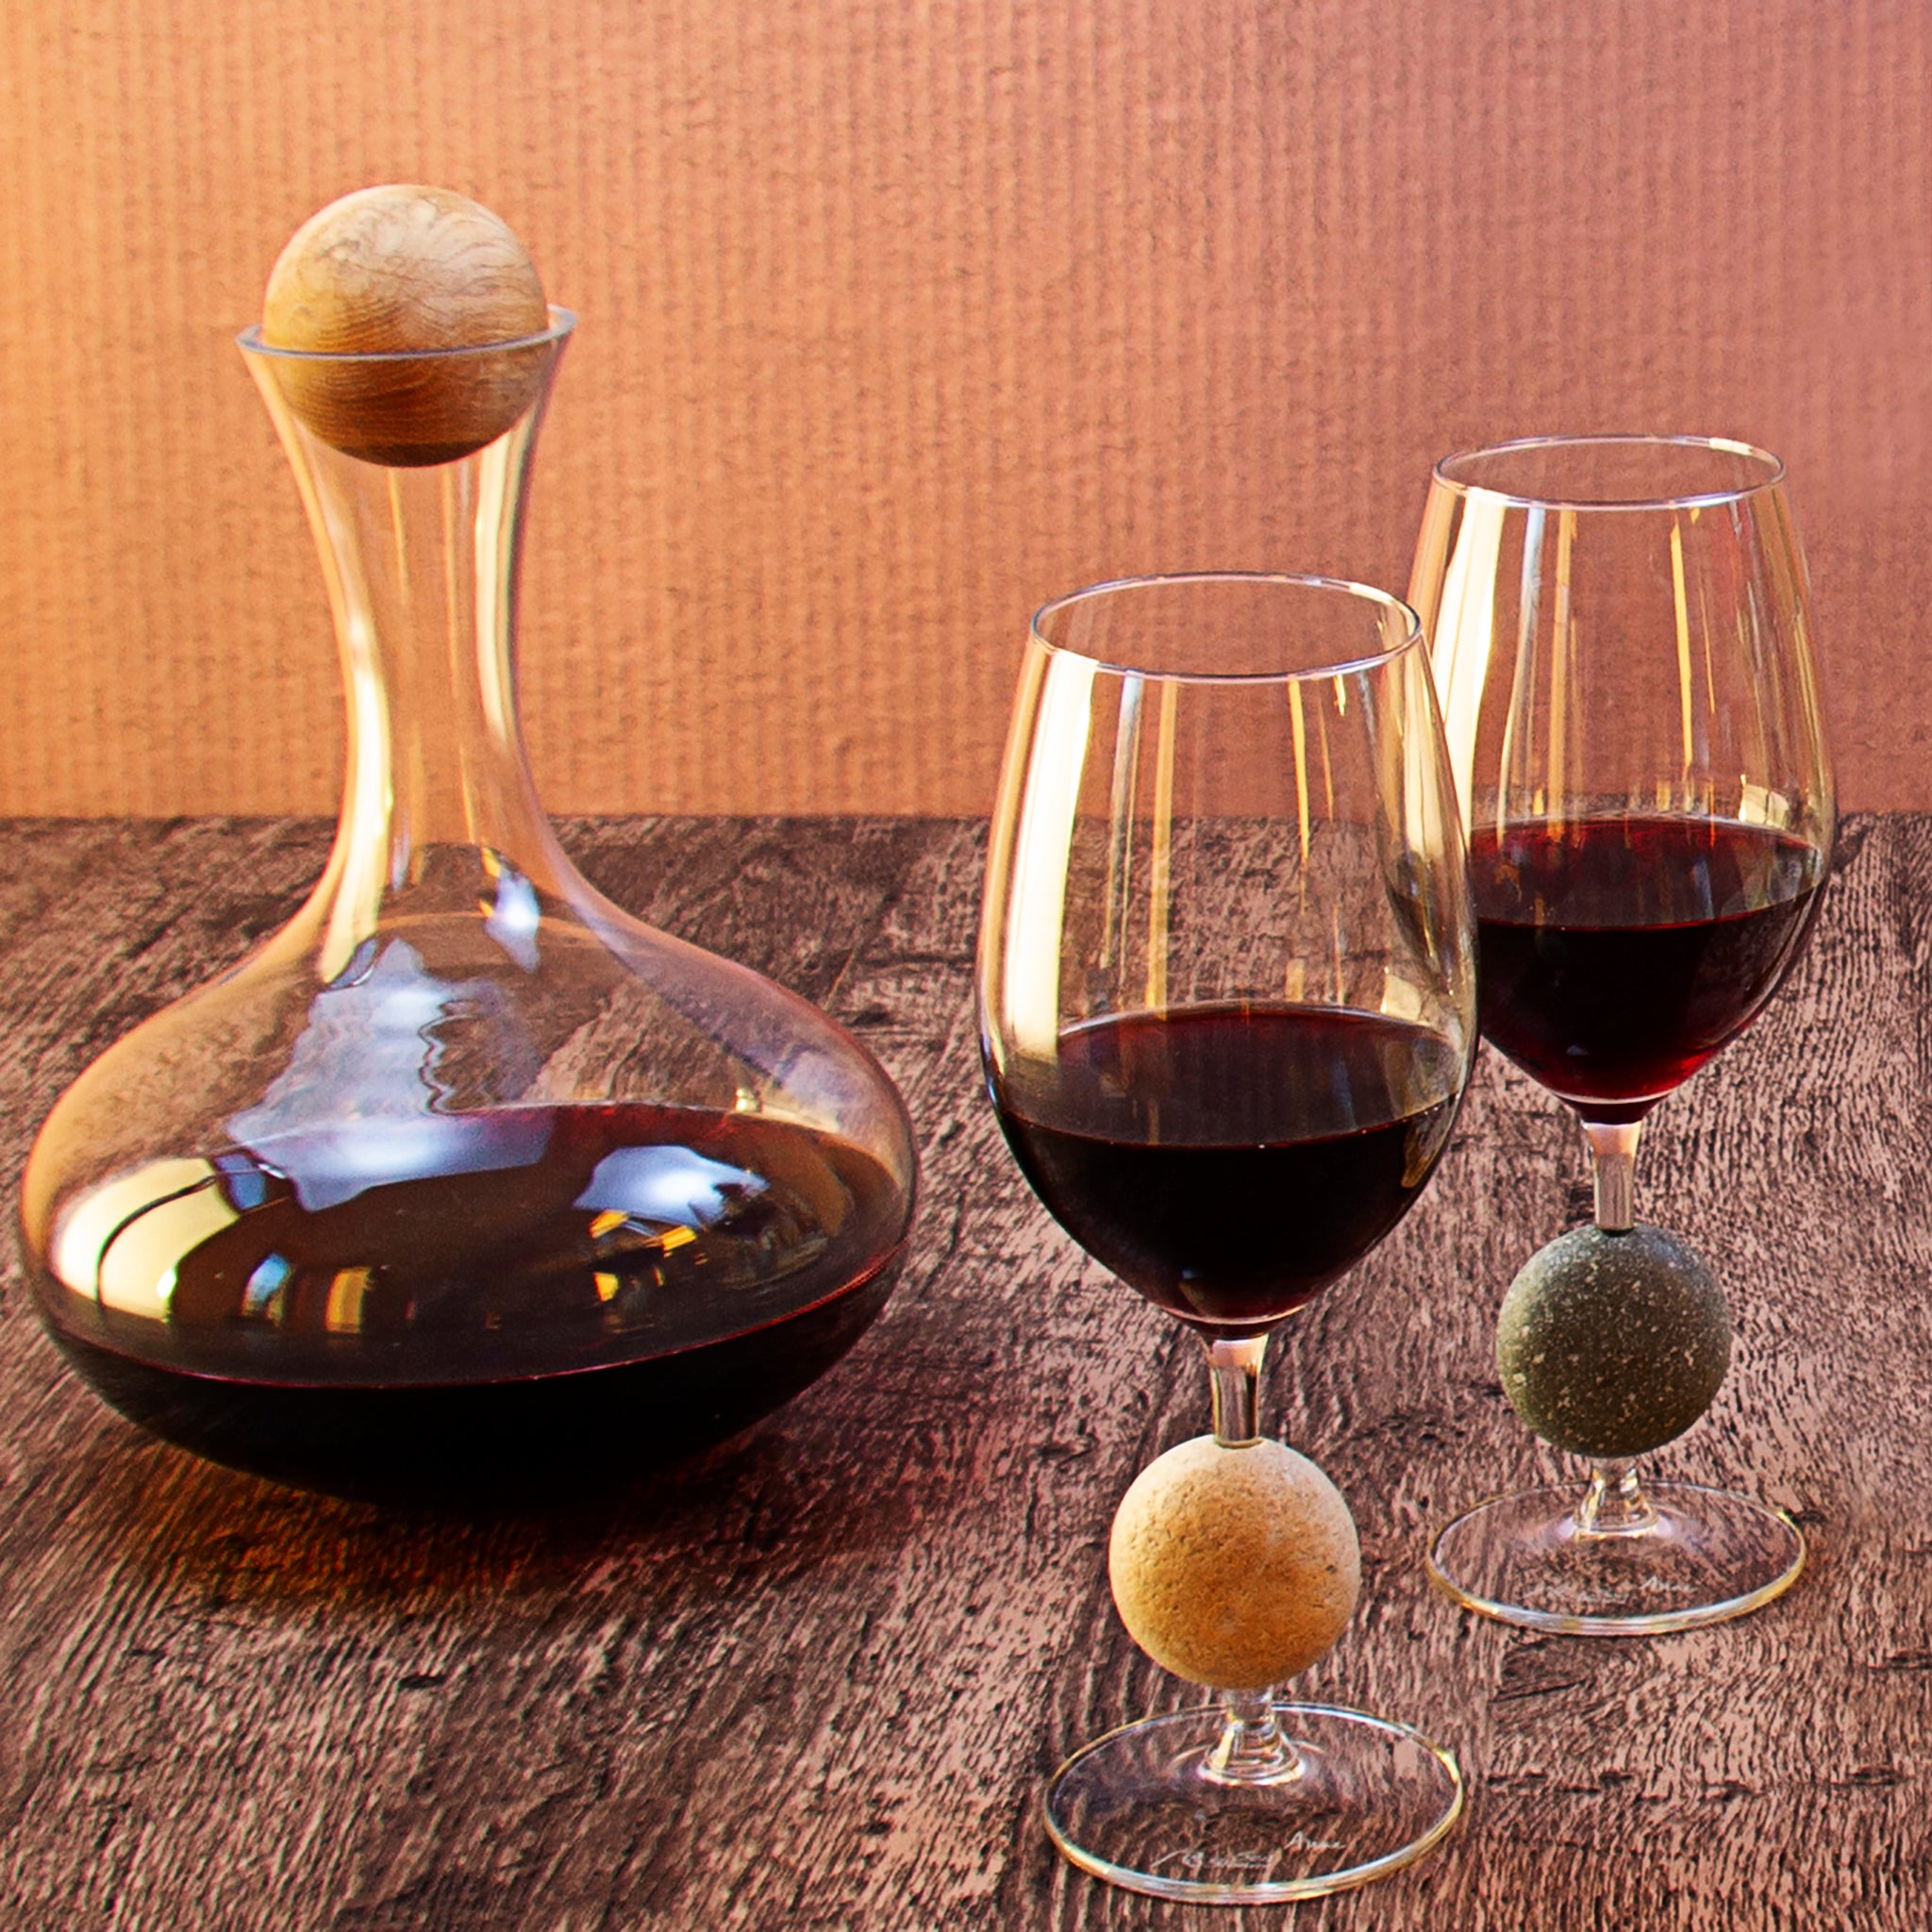 Touchstone Wine Glasses, Case of 12 – Sea Stones